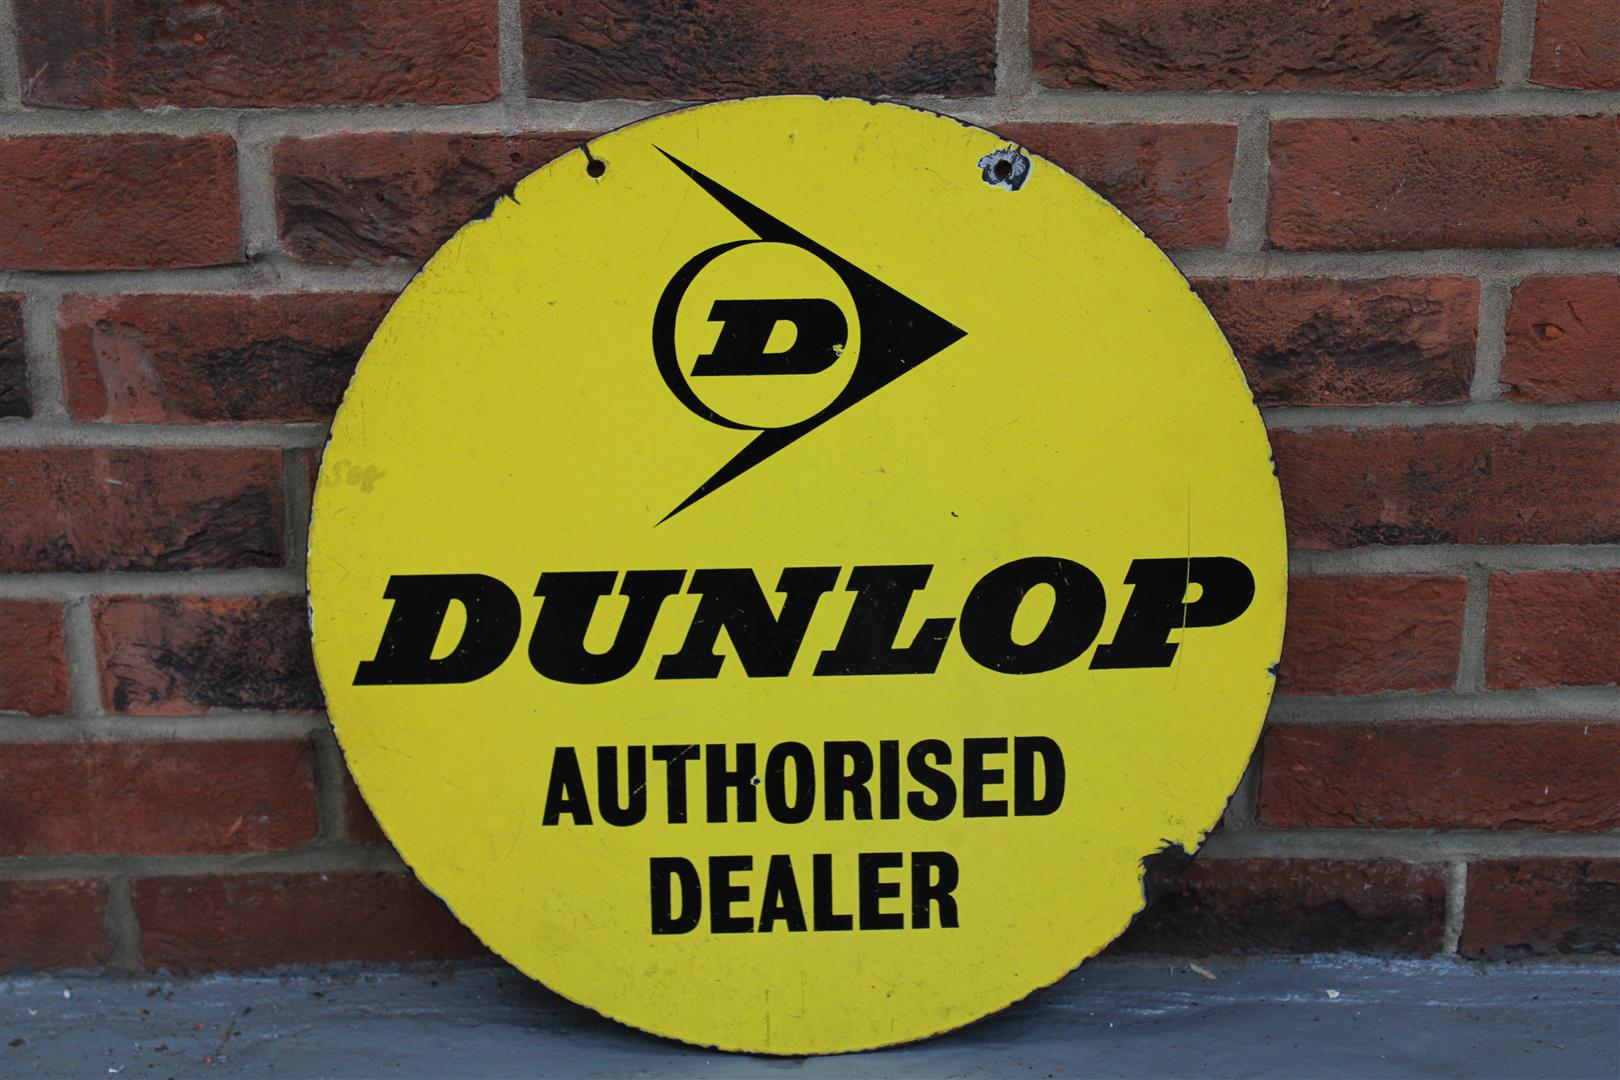 Enamel Dunlop Authorised Dealer Circular Sign